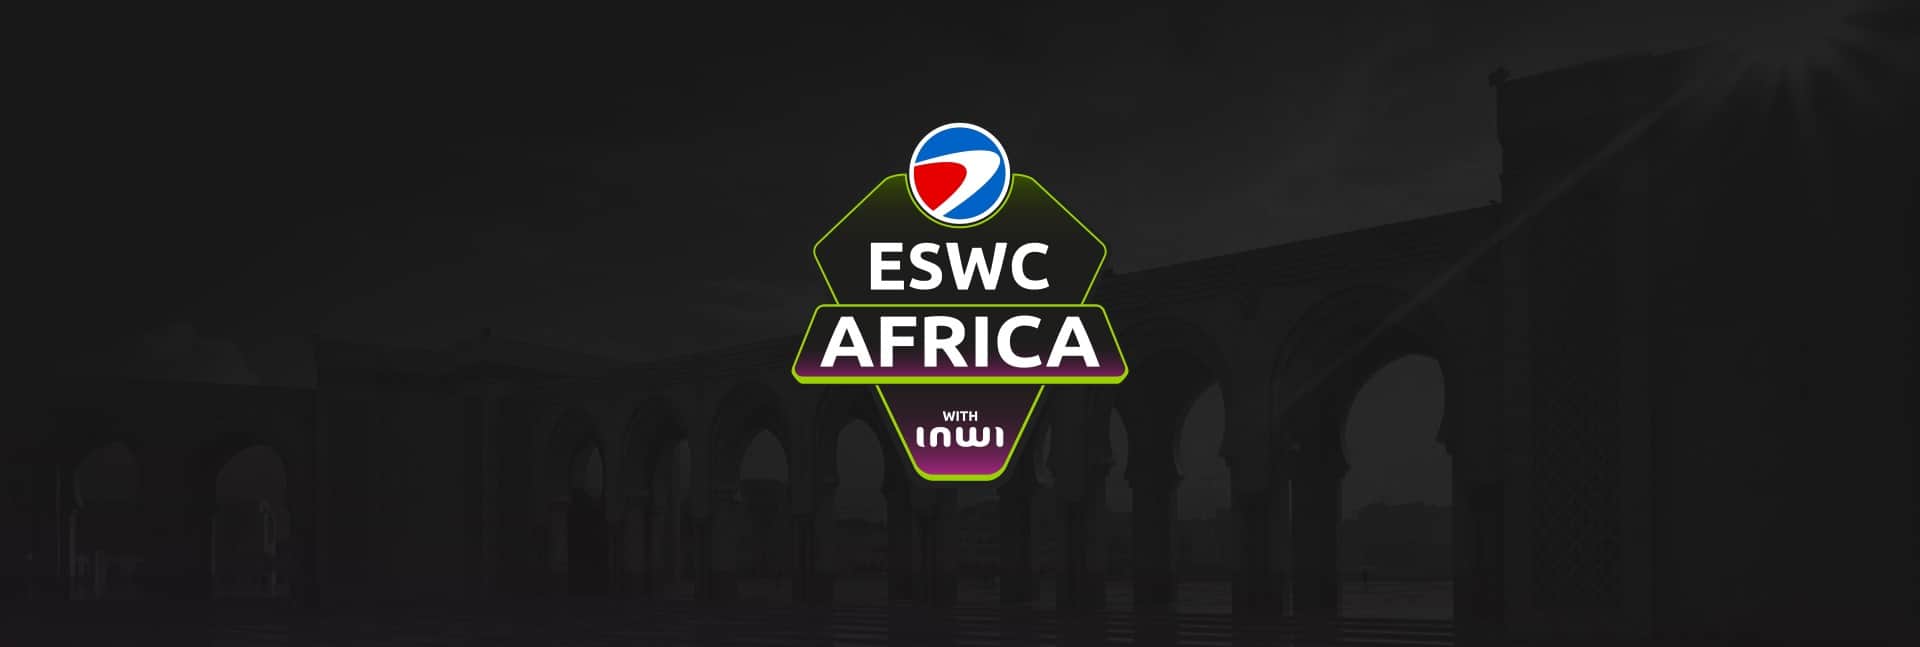 ESWC AFRICA 2018